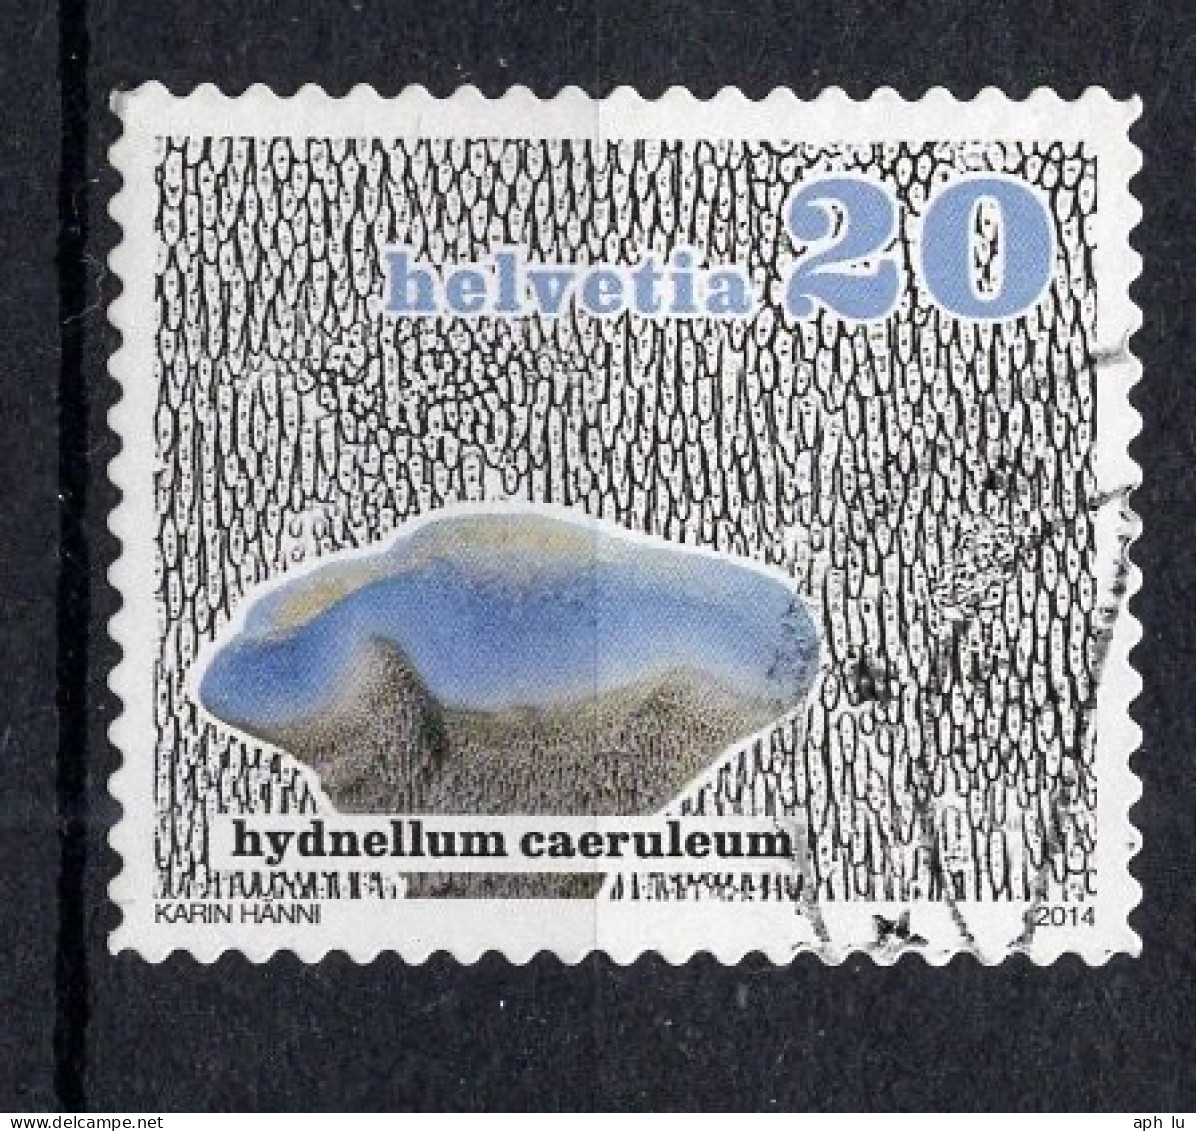 Marke 2014 Gestempelt (h460205) - Used Stamps